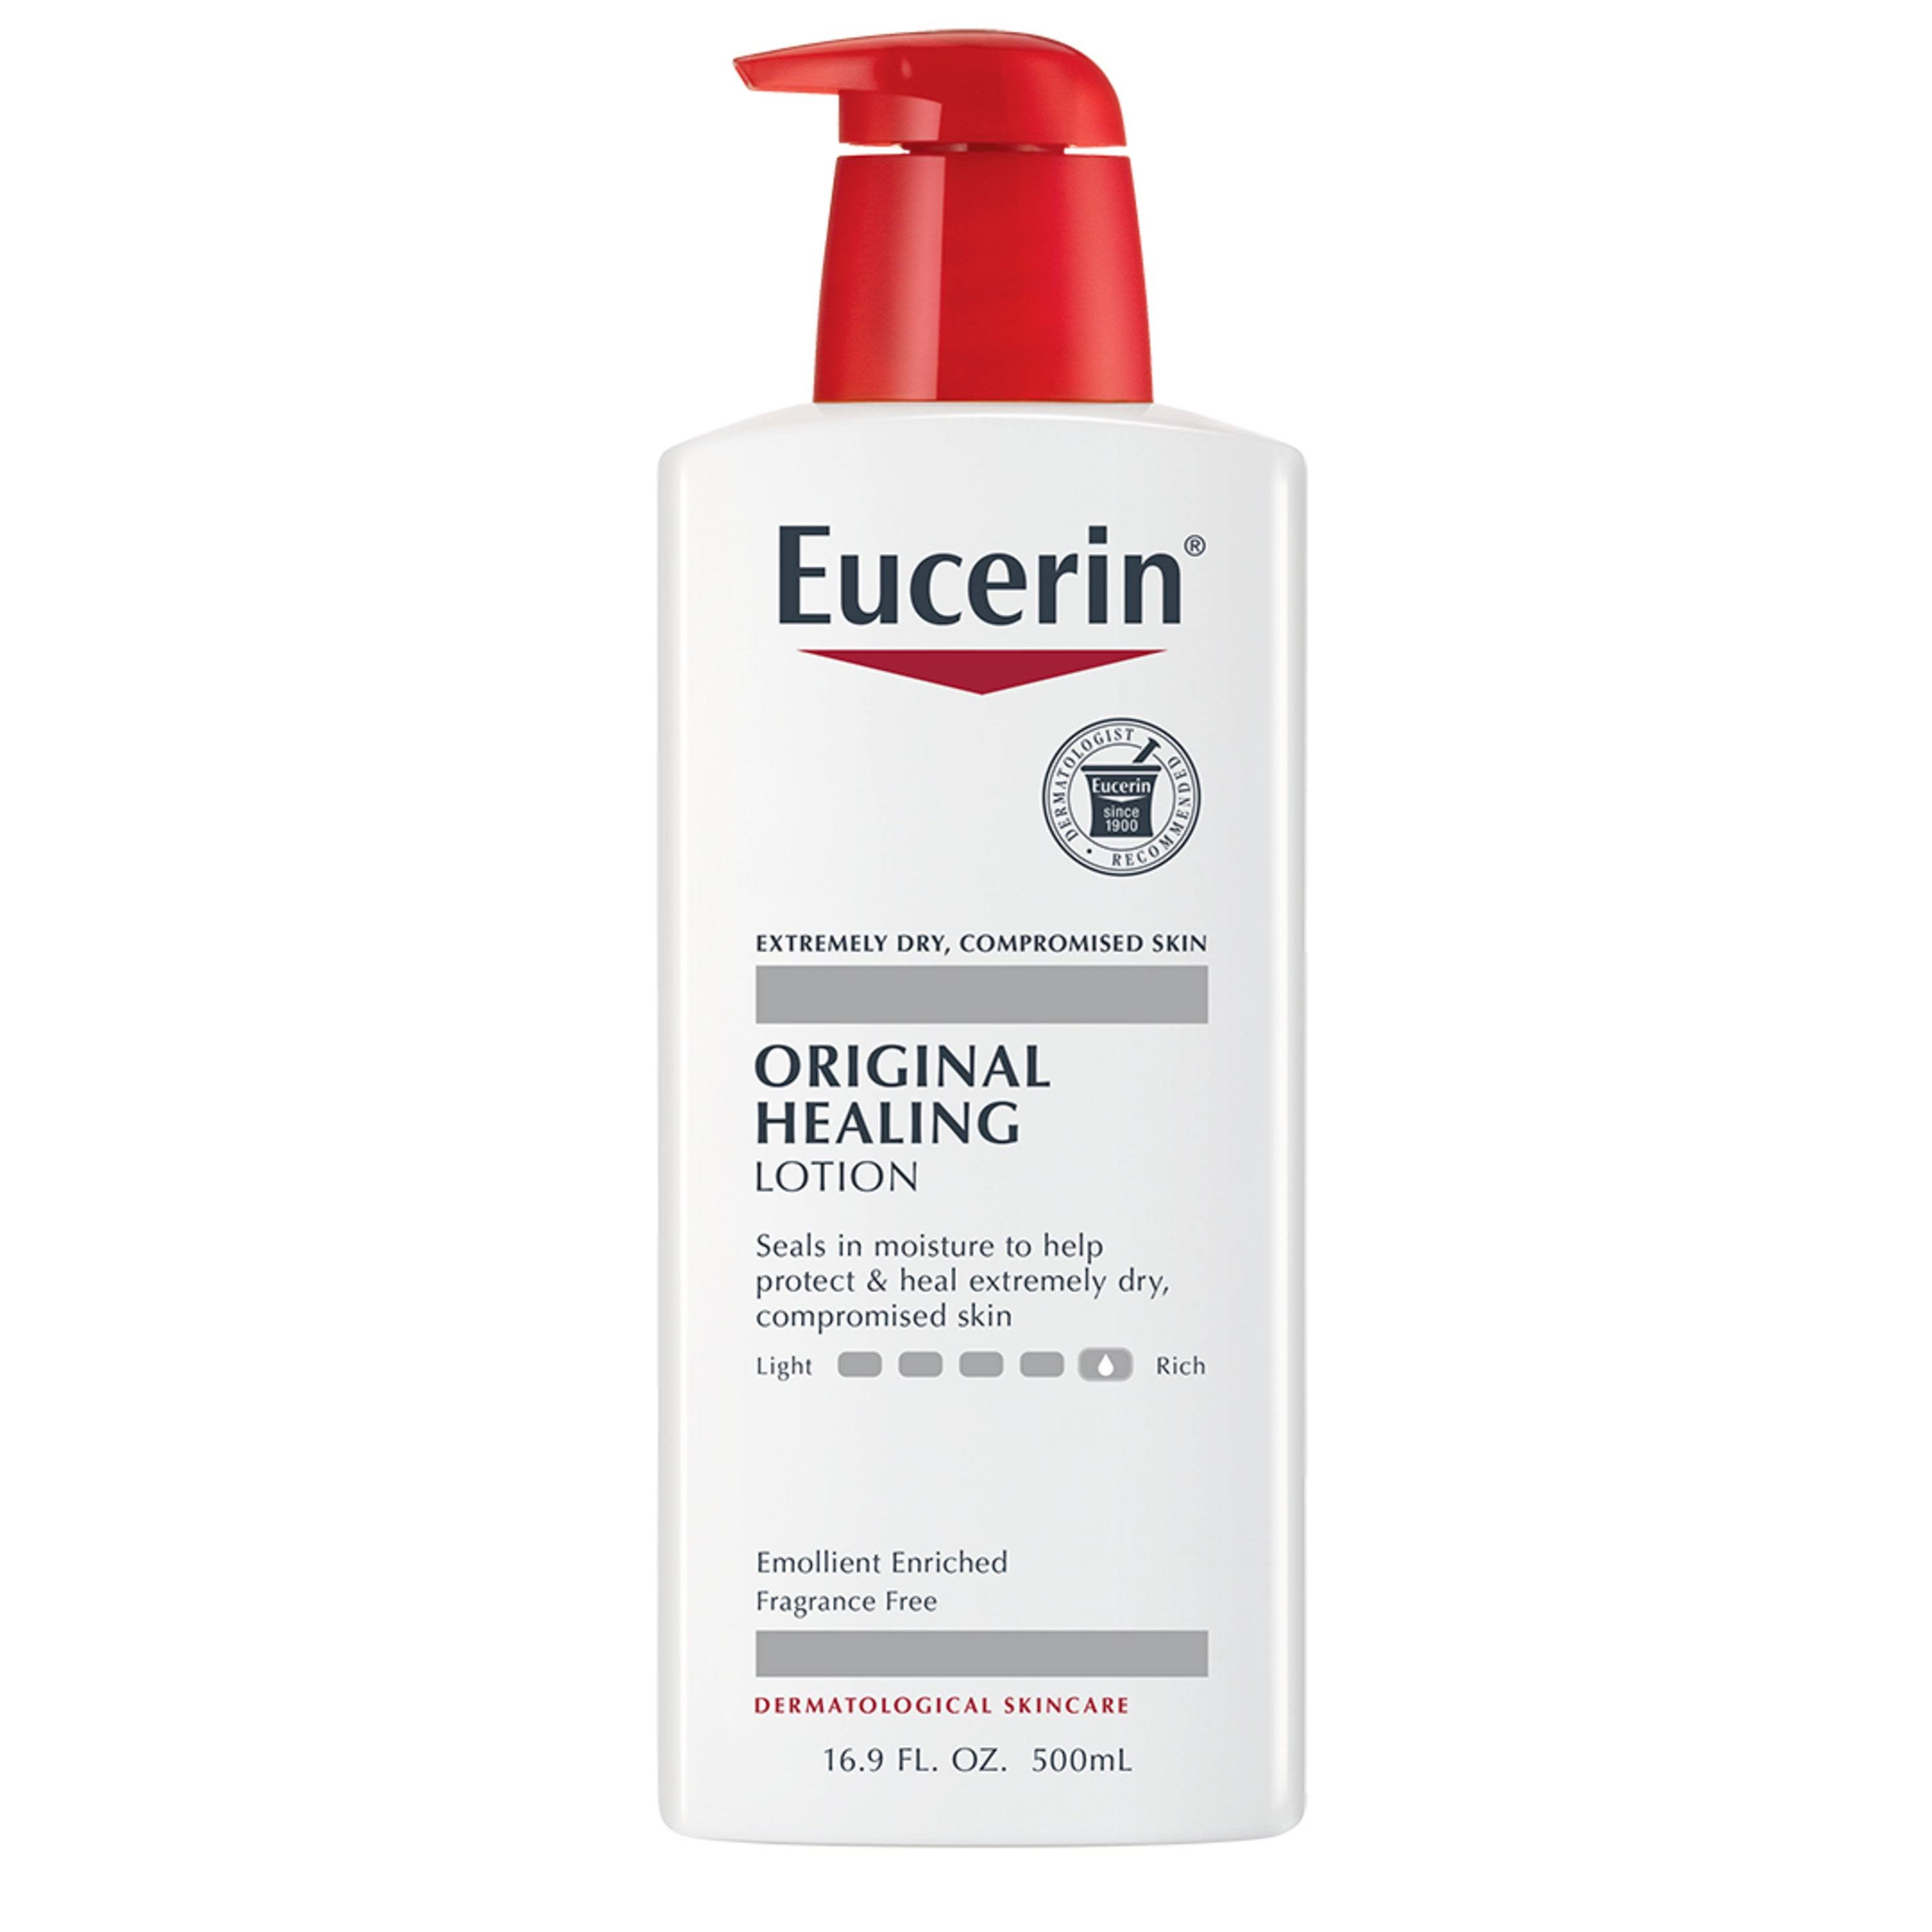 Eucerin Original Healing Lotion - 16.9 fl oz